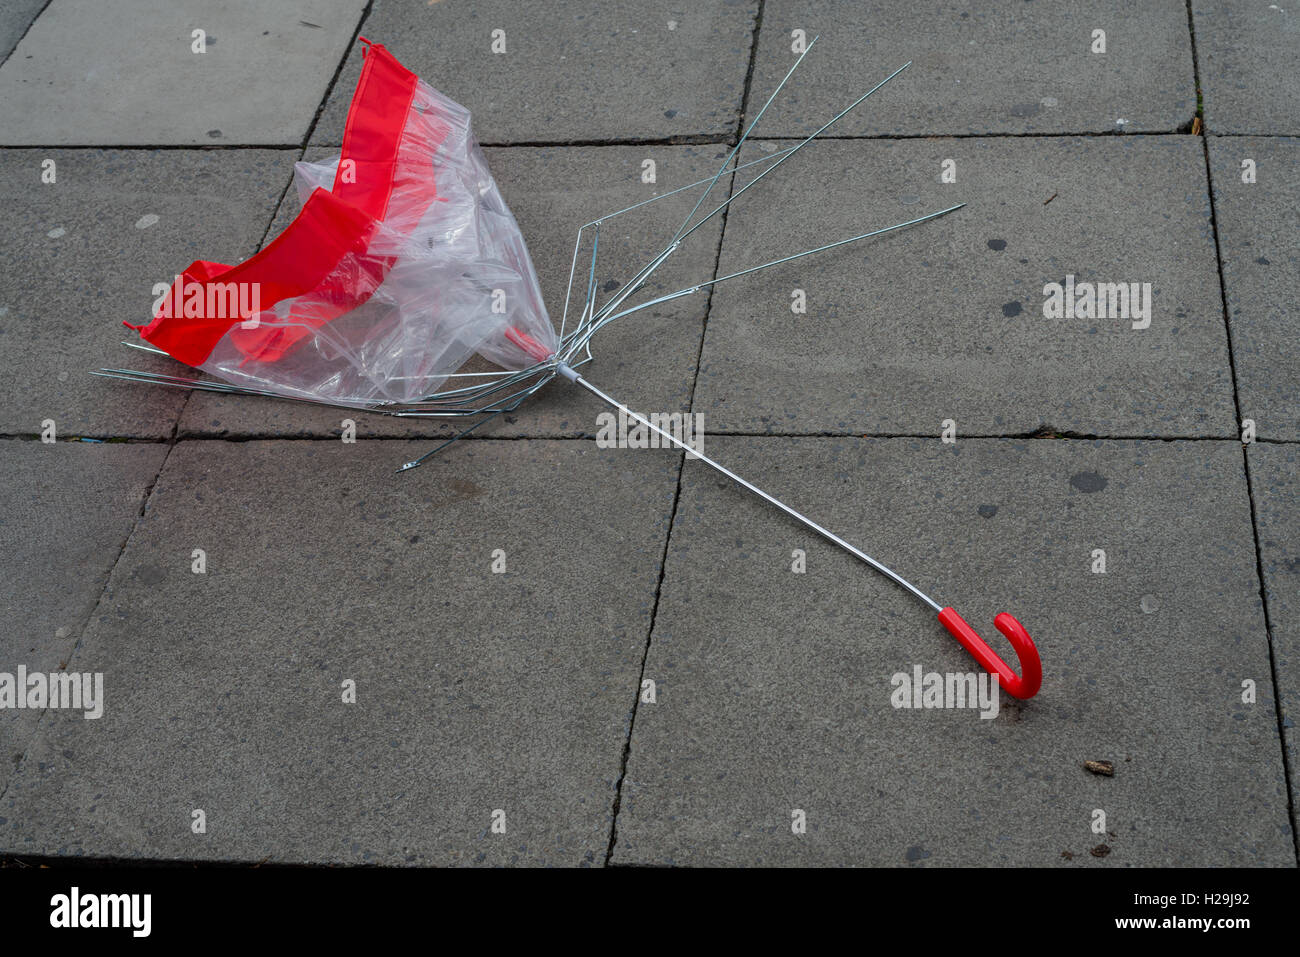 Broken red umbrella Stock Photo